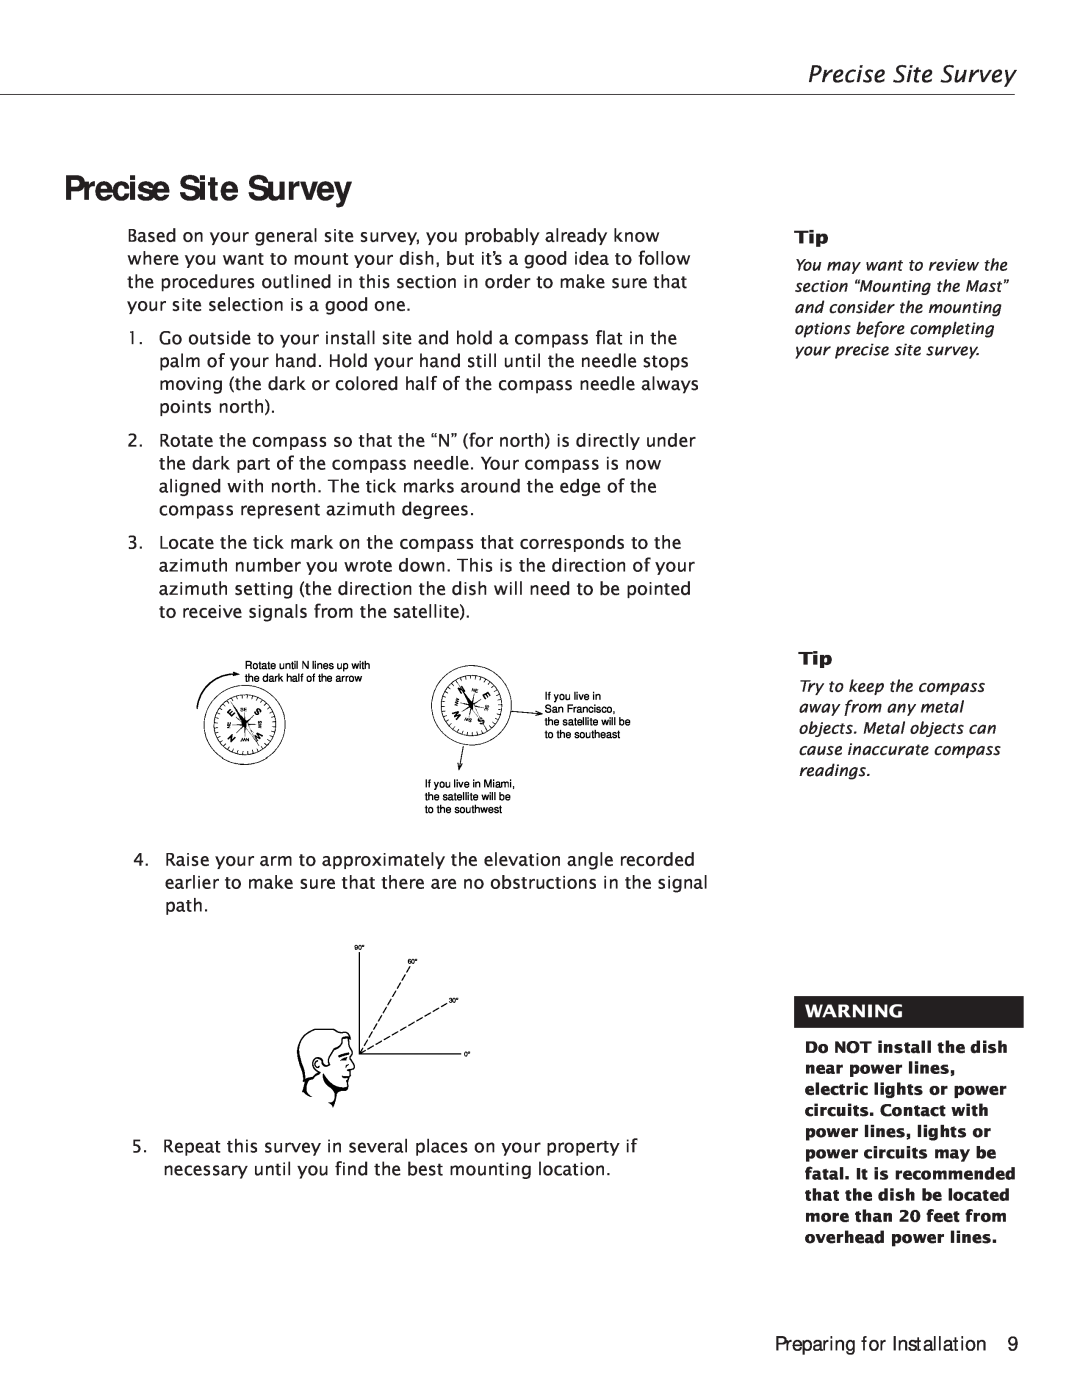 RCA Satellite TV Antenna manual Precise Site Survey, Preparing for Installation 